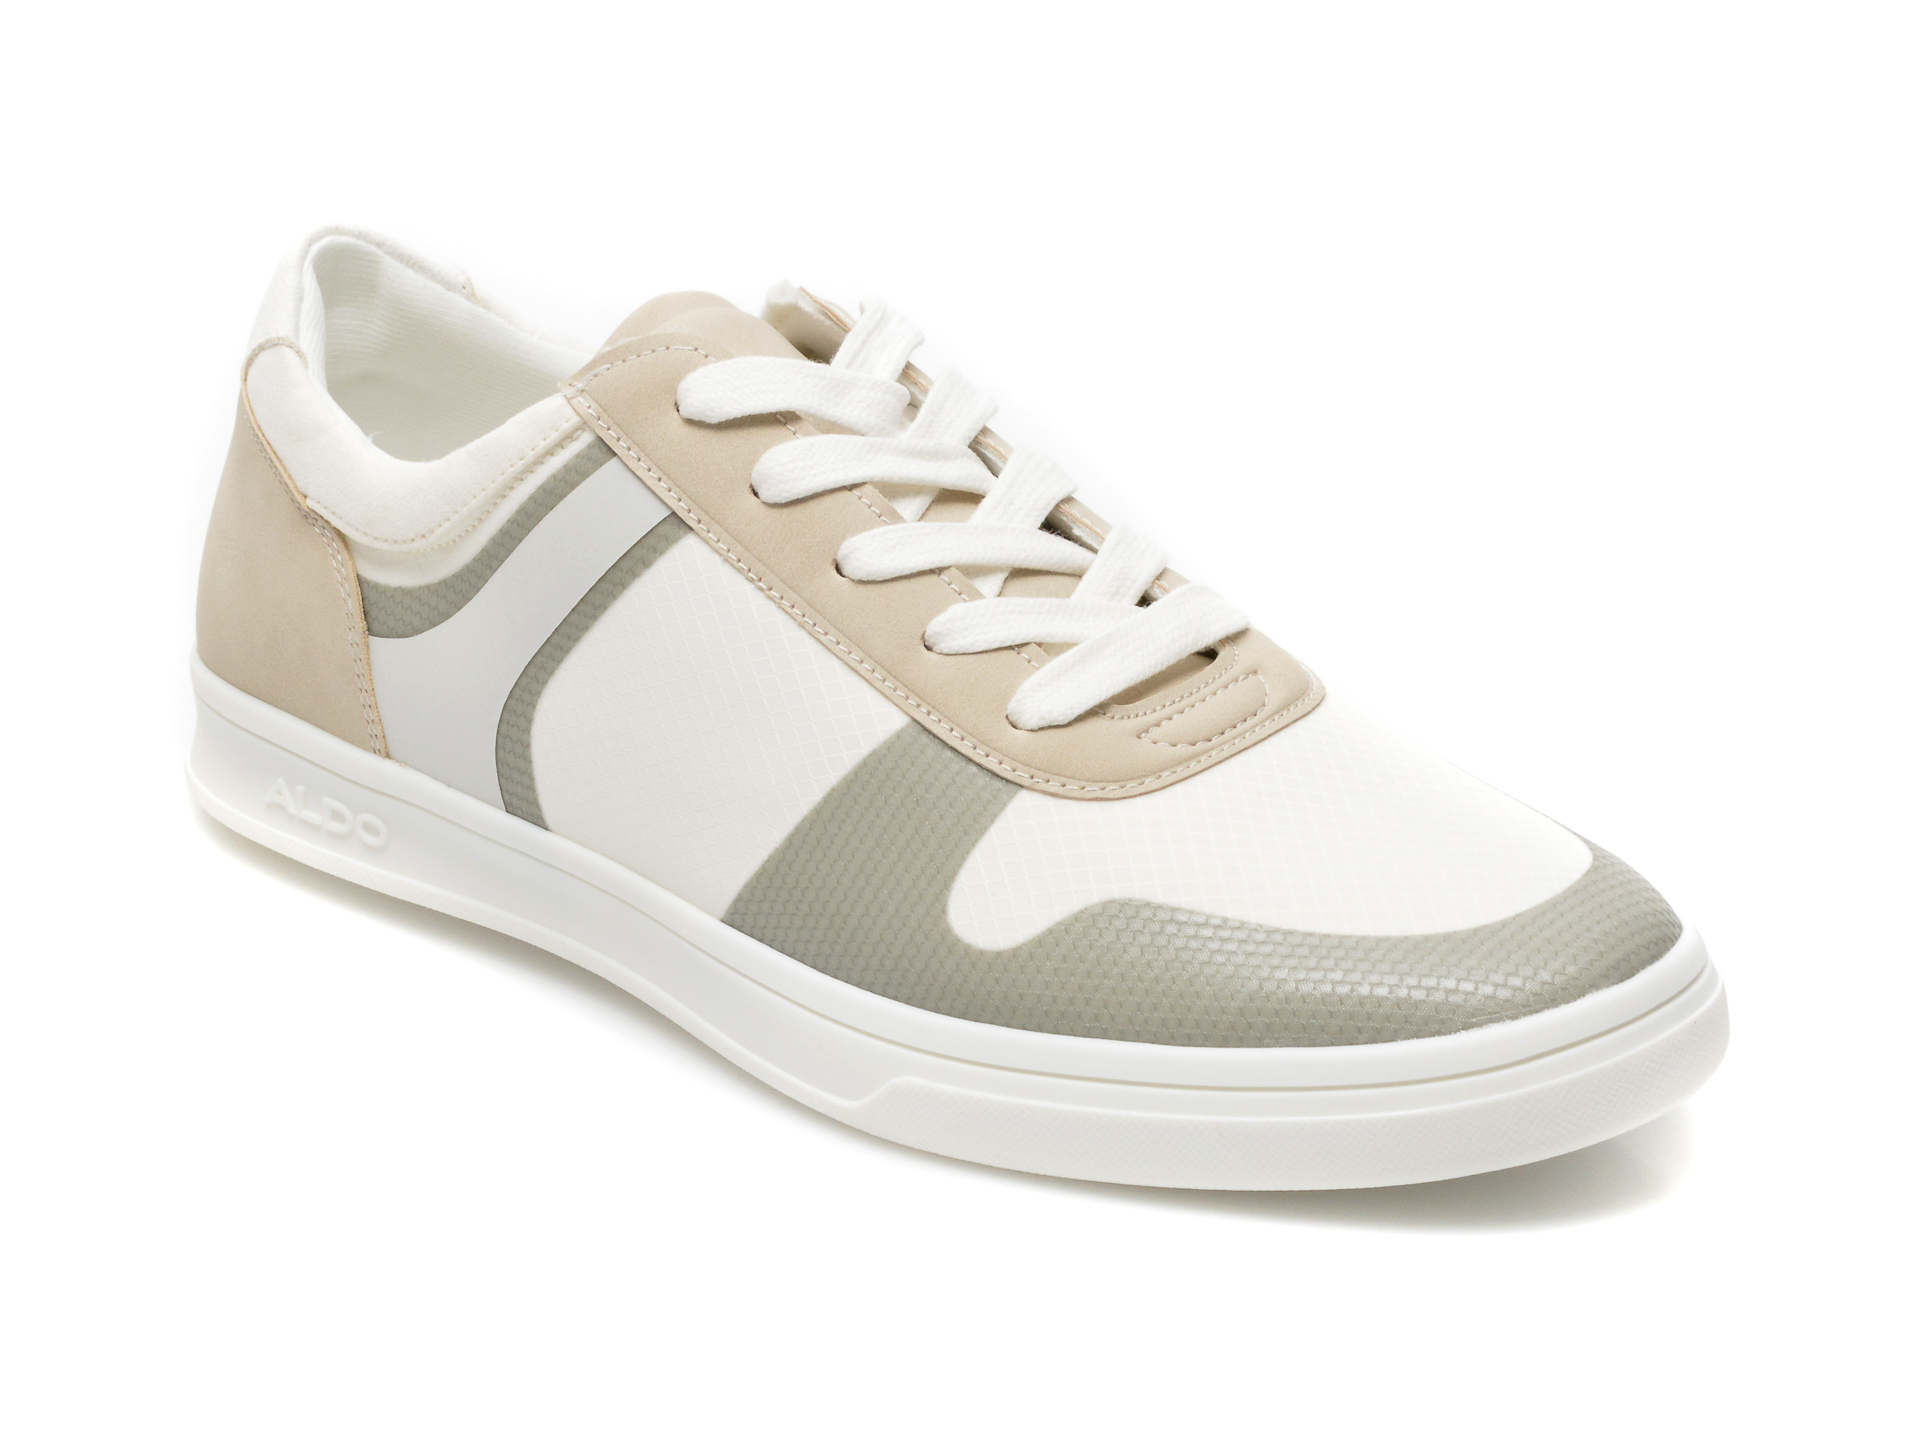 Pantofi sport ALDO bej, 13254063, din material textil si piele ecologica Aldo